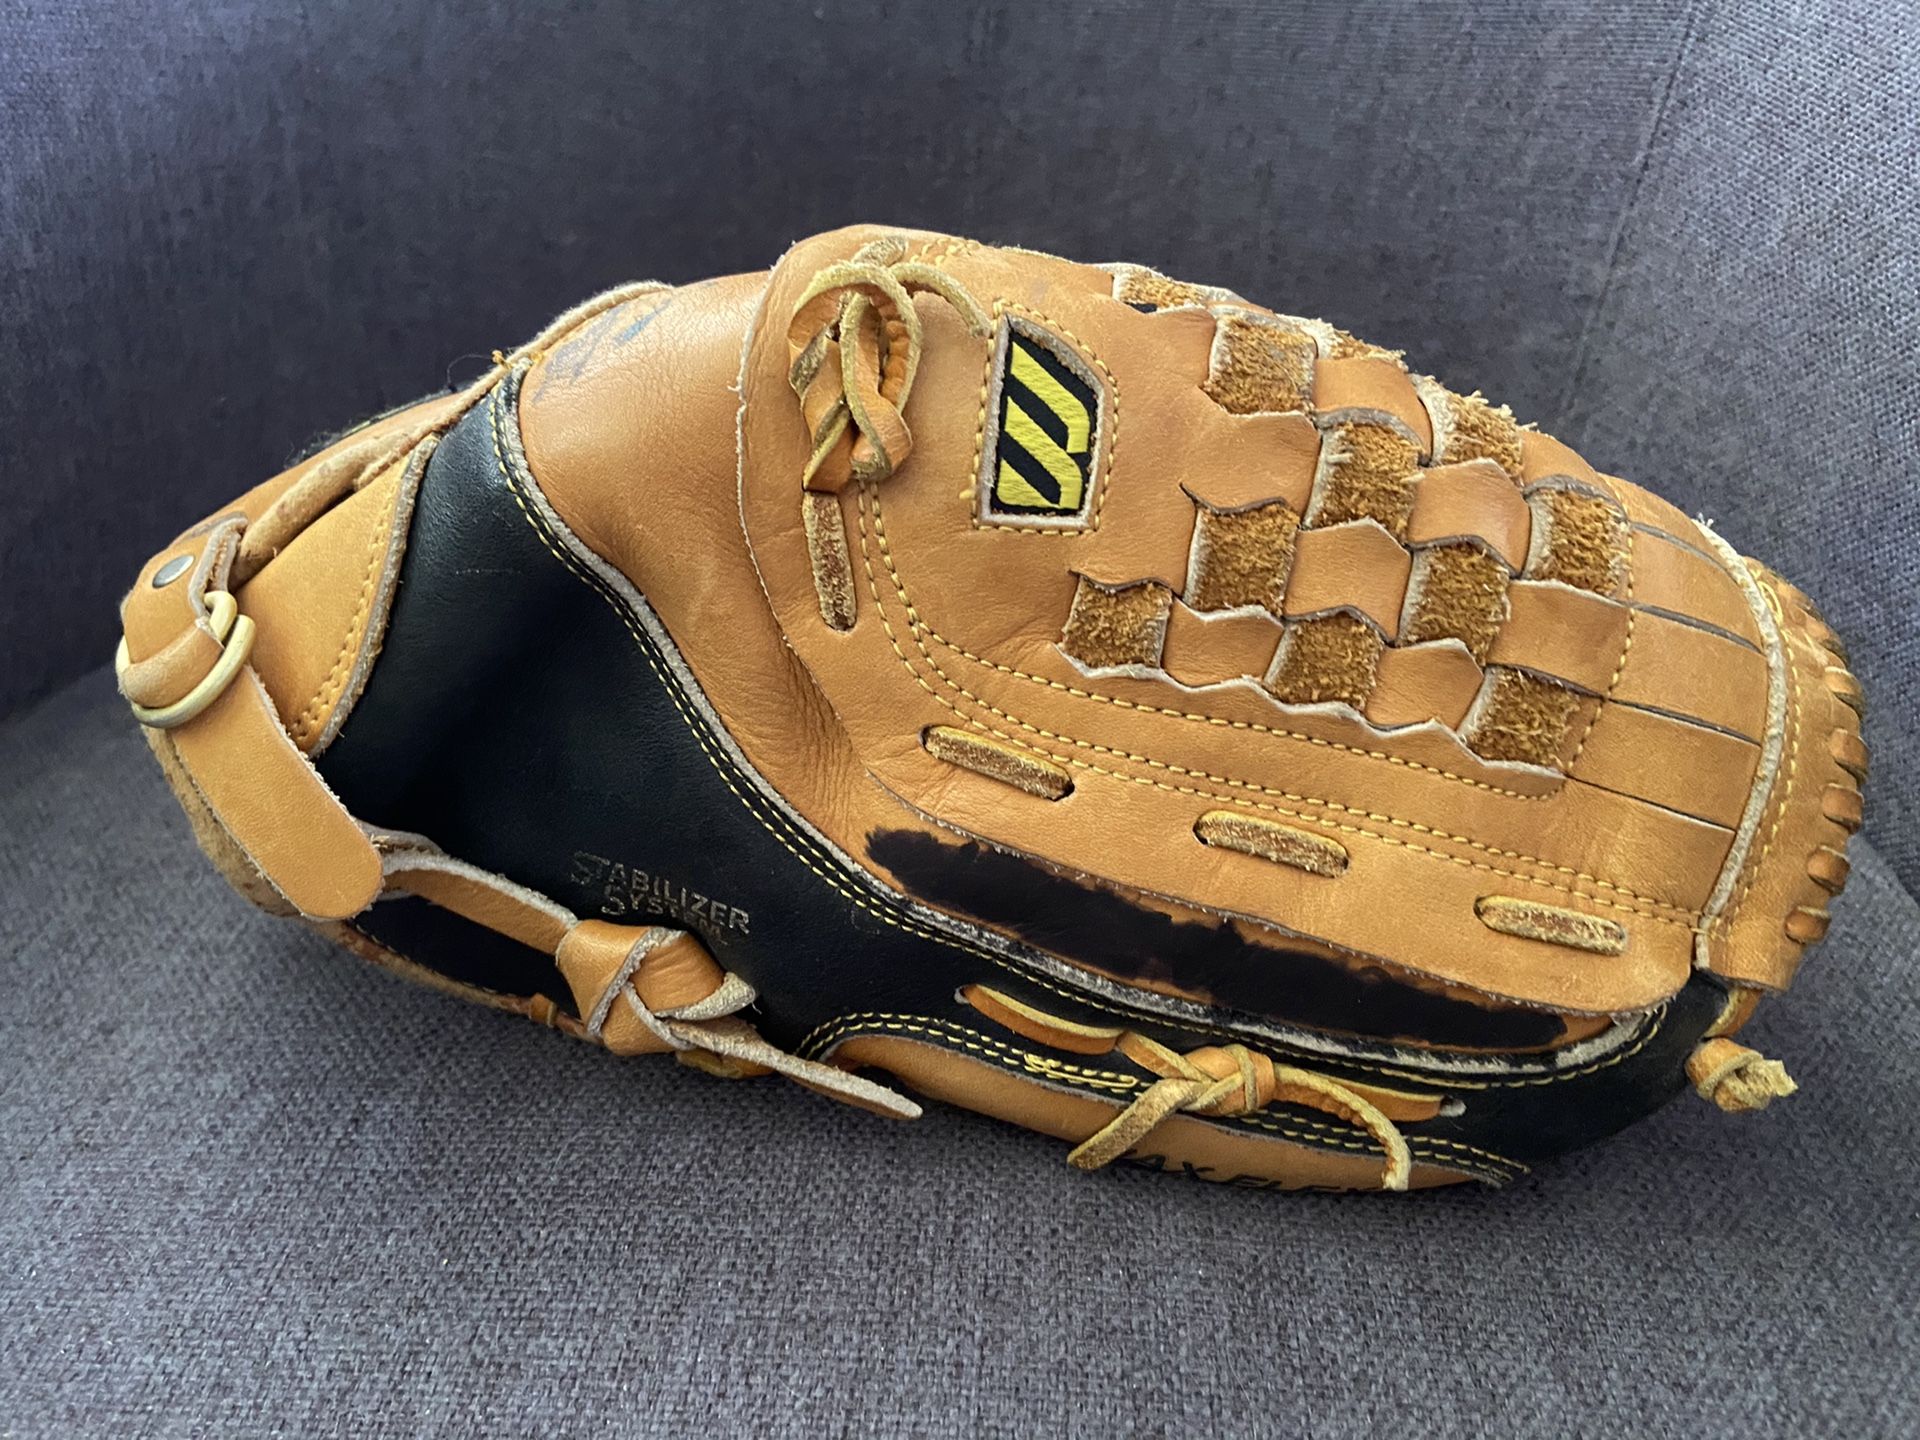 Mizuno MZ3600 12.75” Pro Model Softball glove